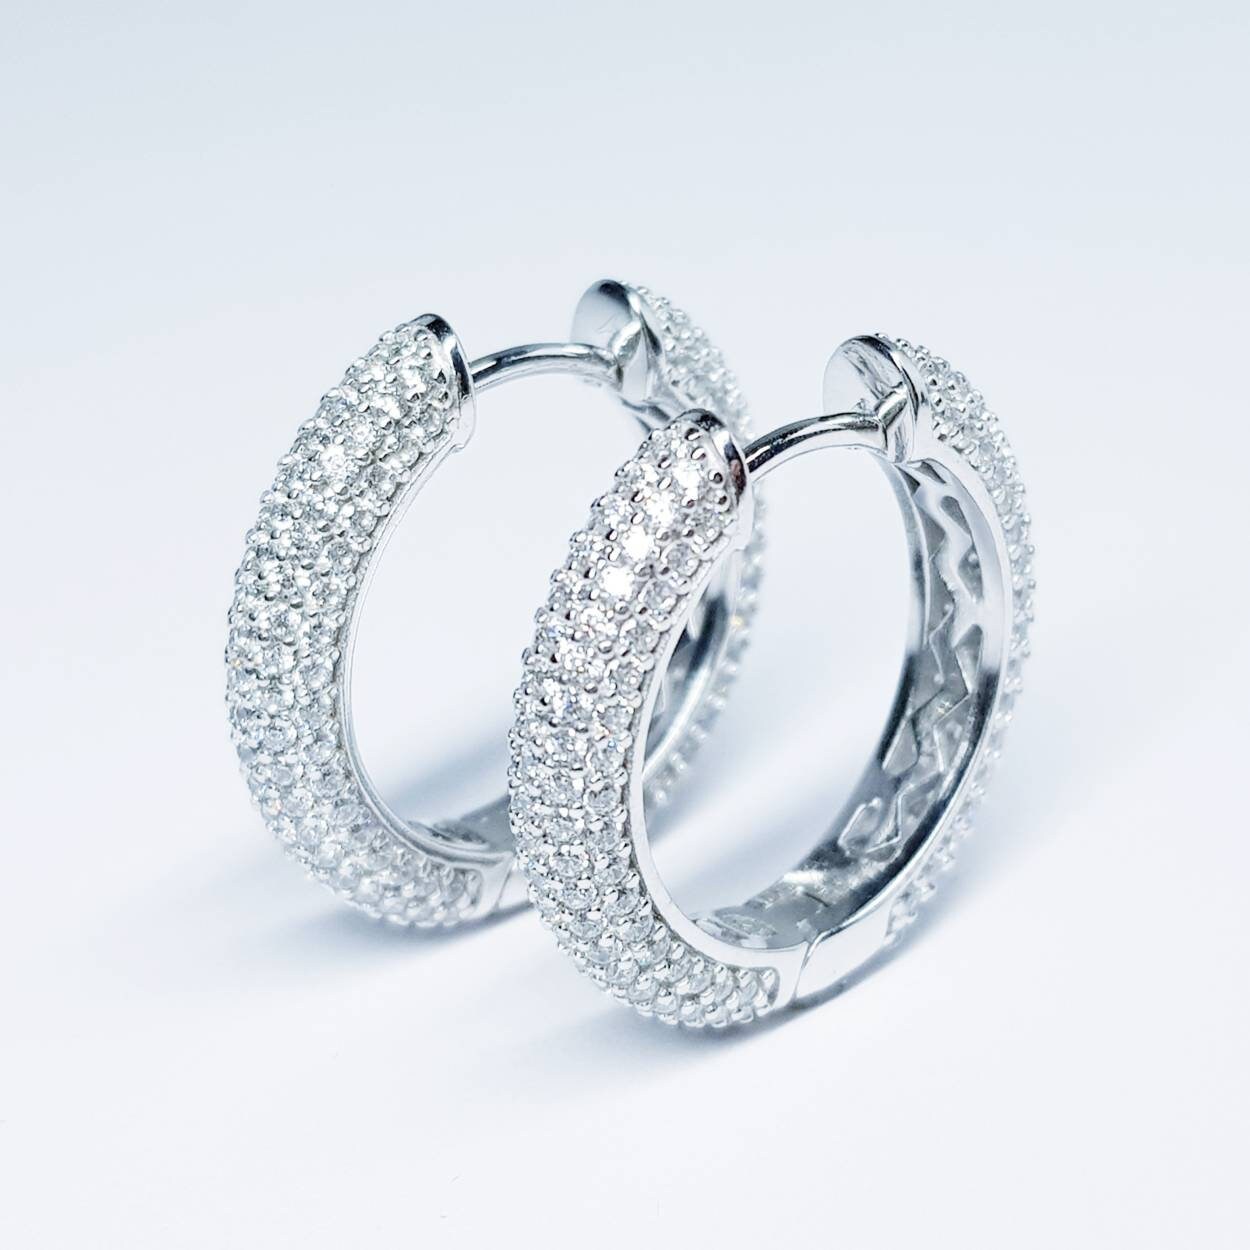 Sterling silver cz encrusted hoop earrings, lever back diamond hoops, luxurious dress jewelry